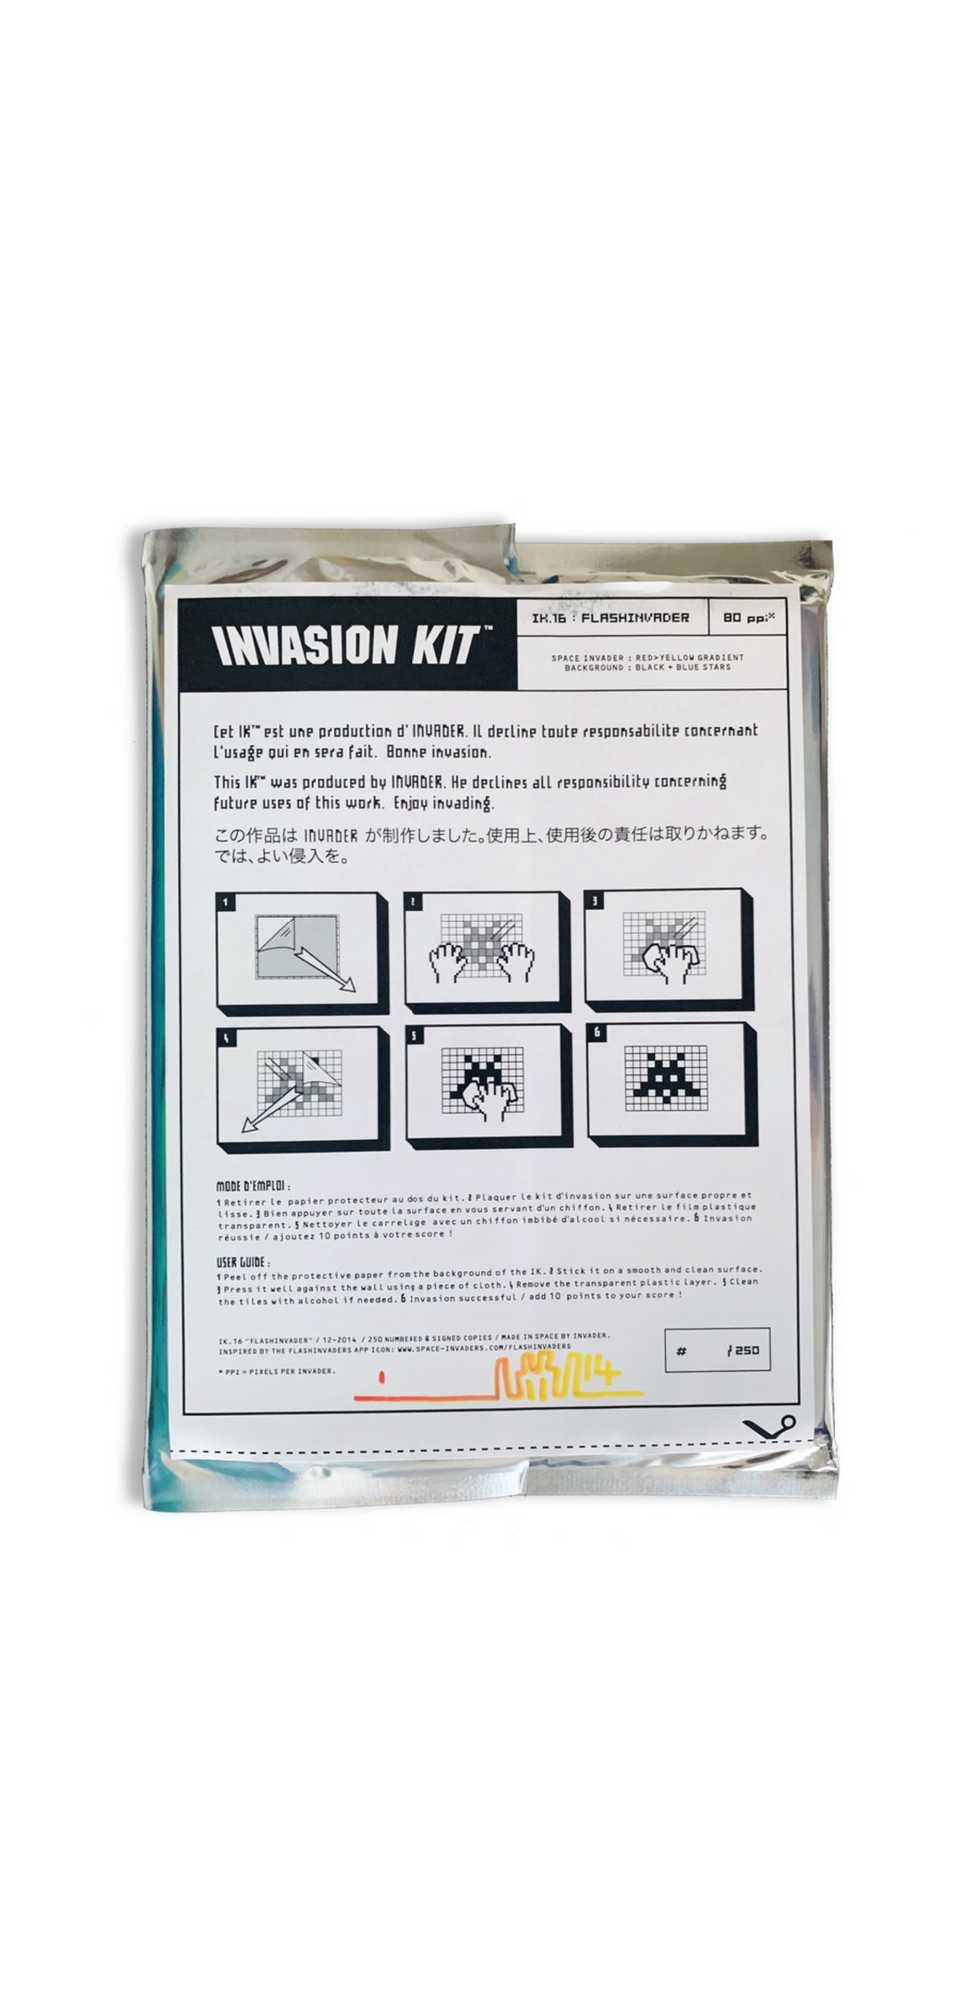 Invader Invasion Kit 16 Flashinvader